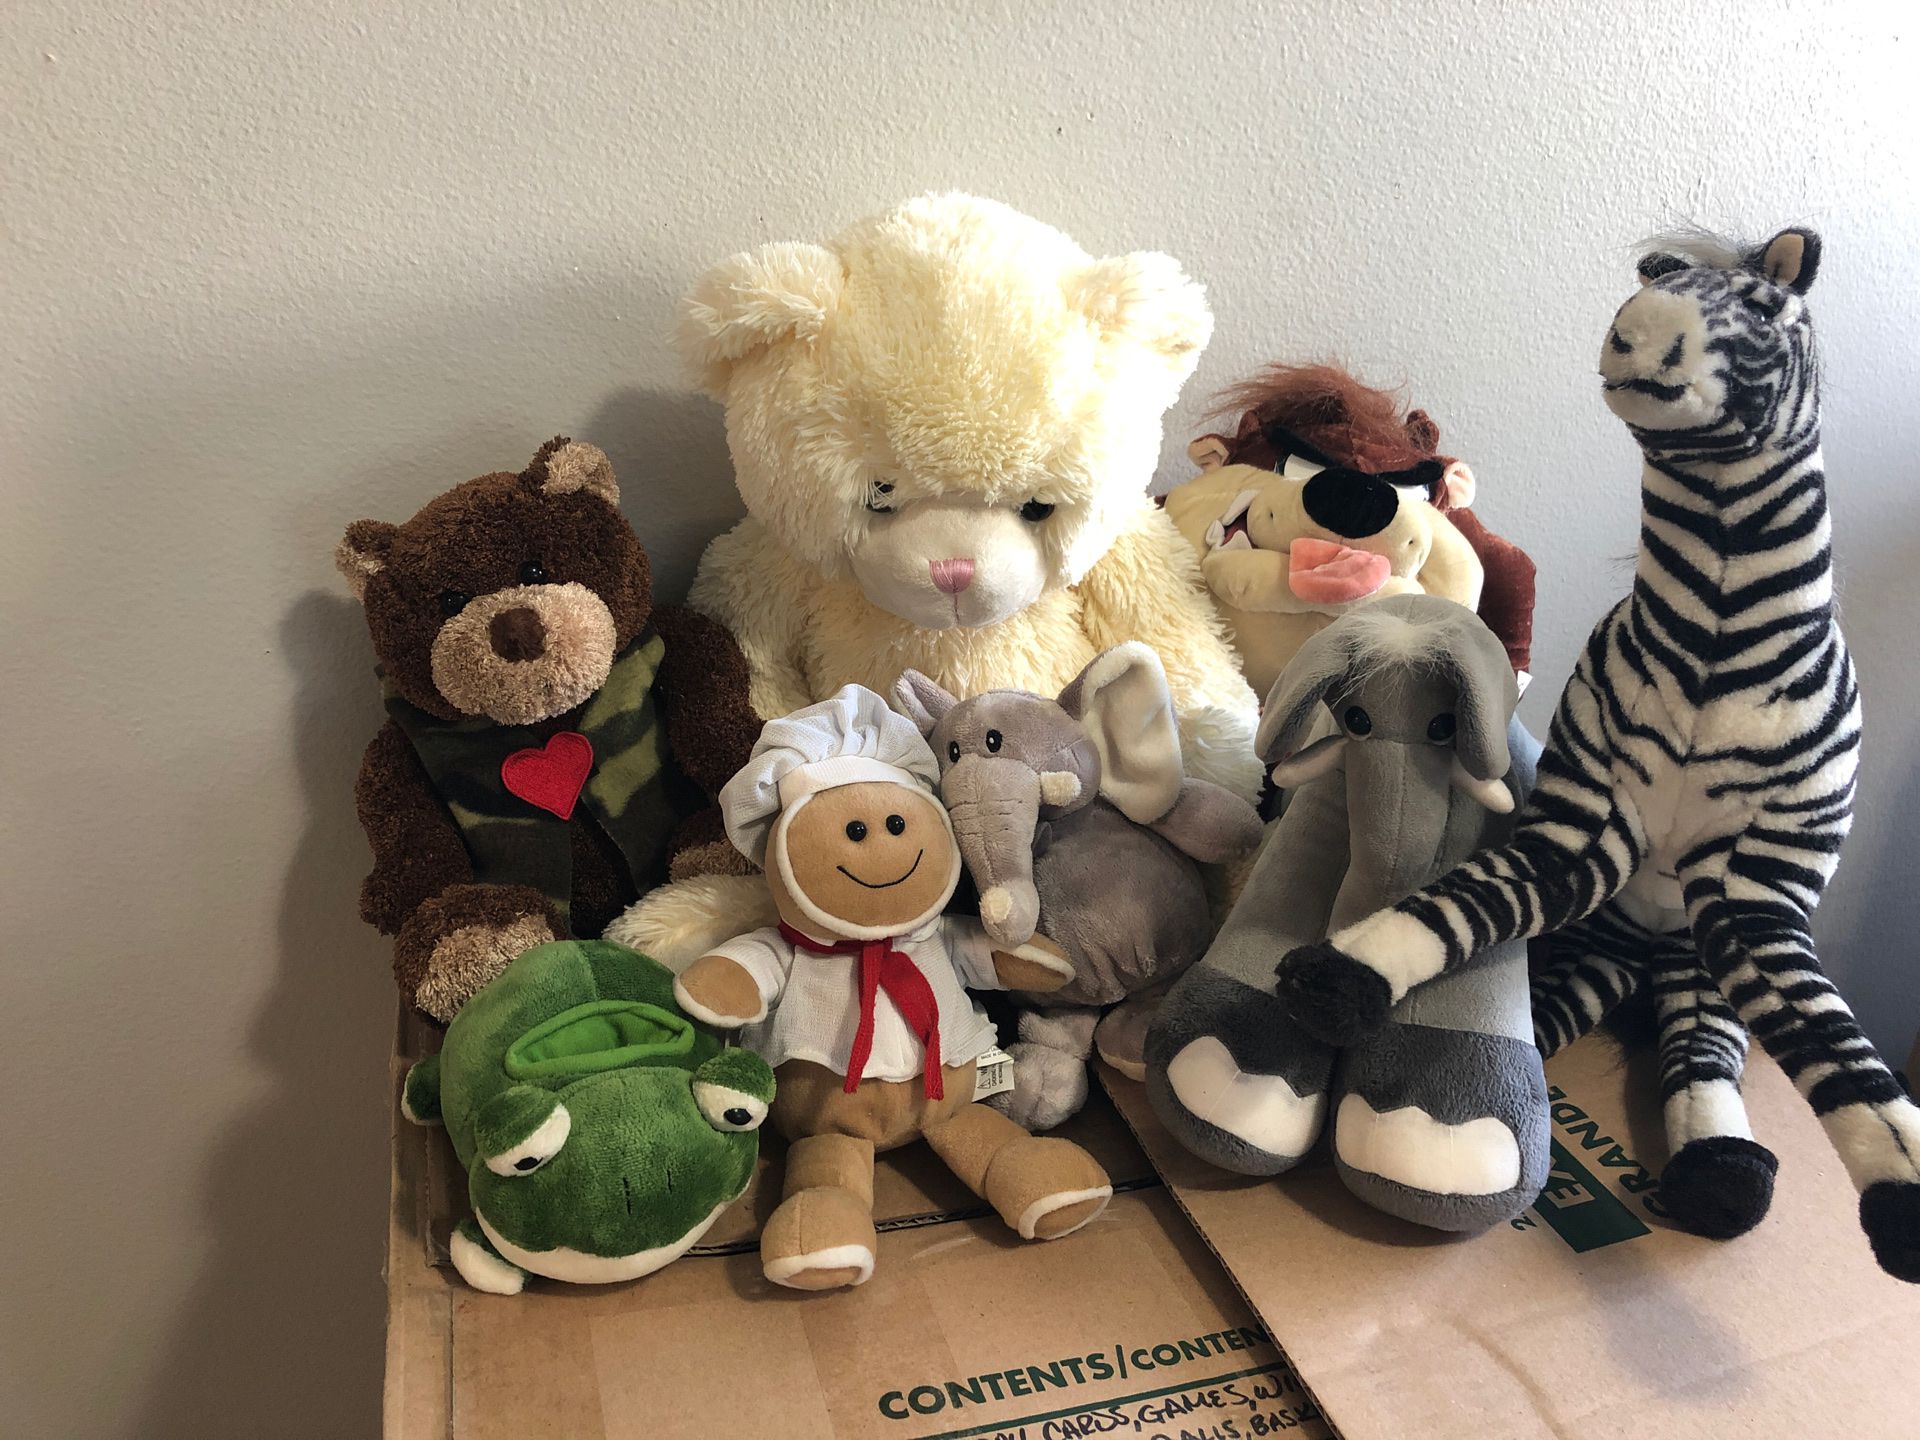 Assorted stuffed bears